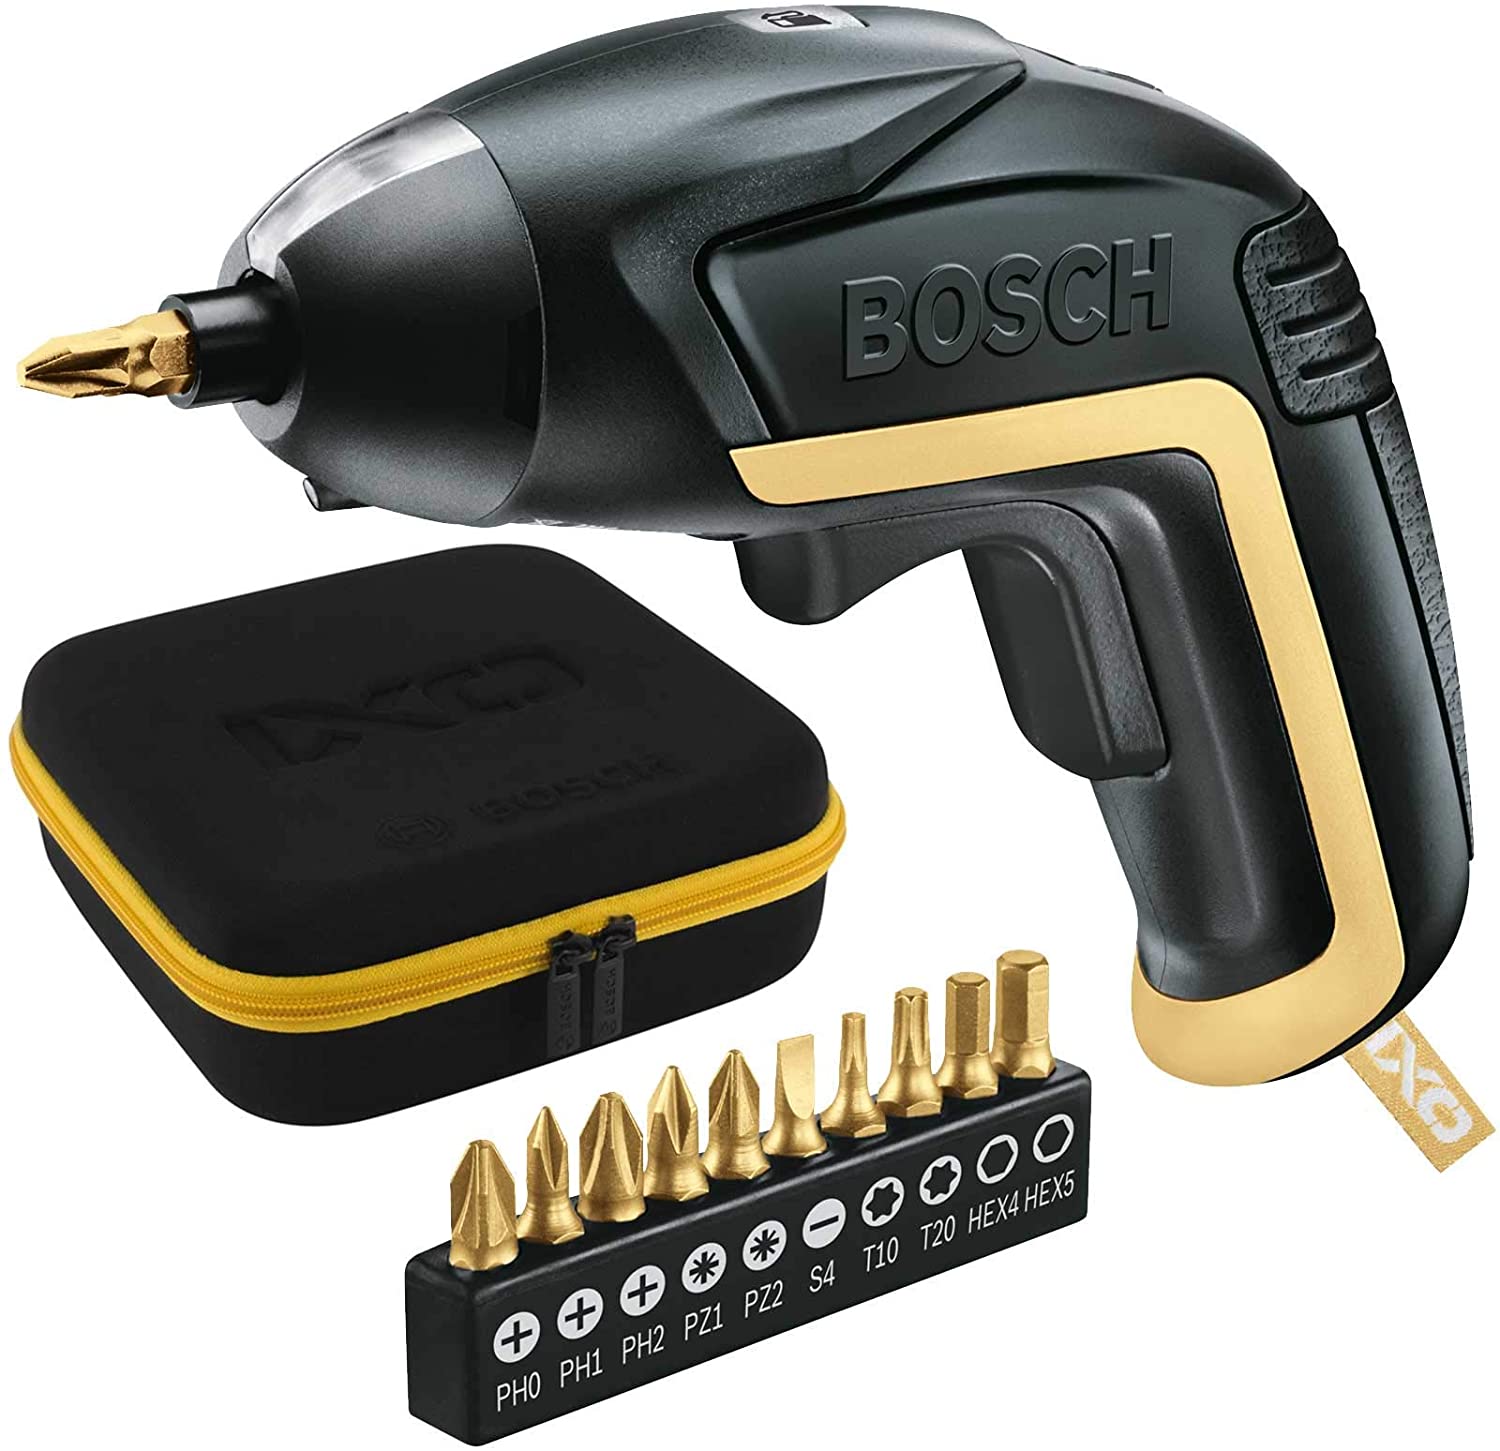 Bosch IXO 3.6 V GOLD Cordless Screw Driver Special Edition